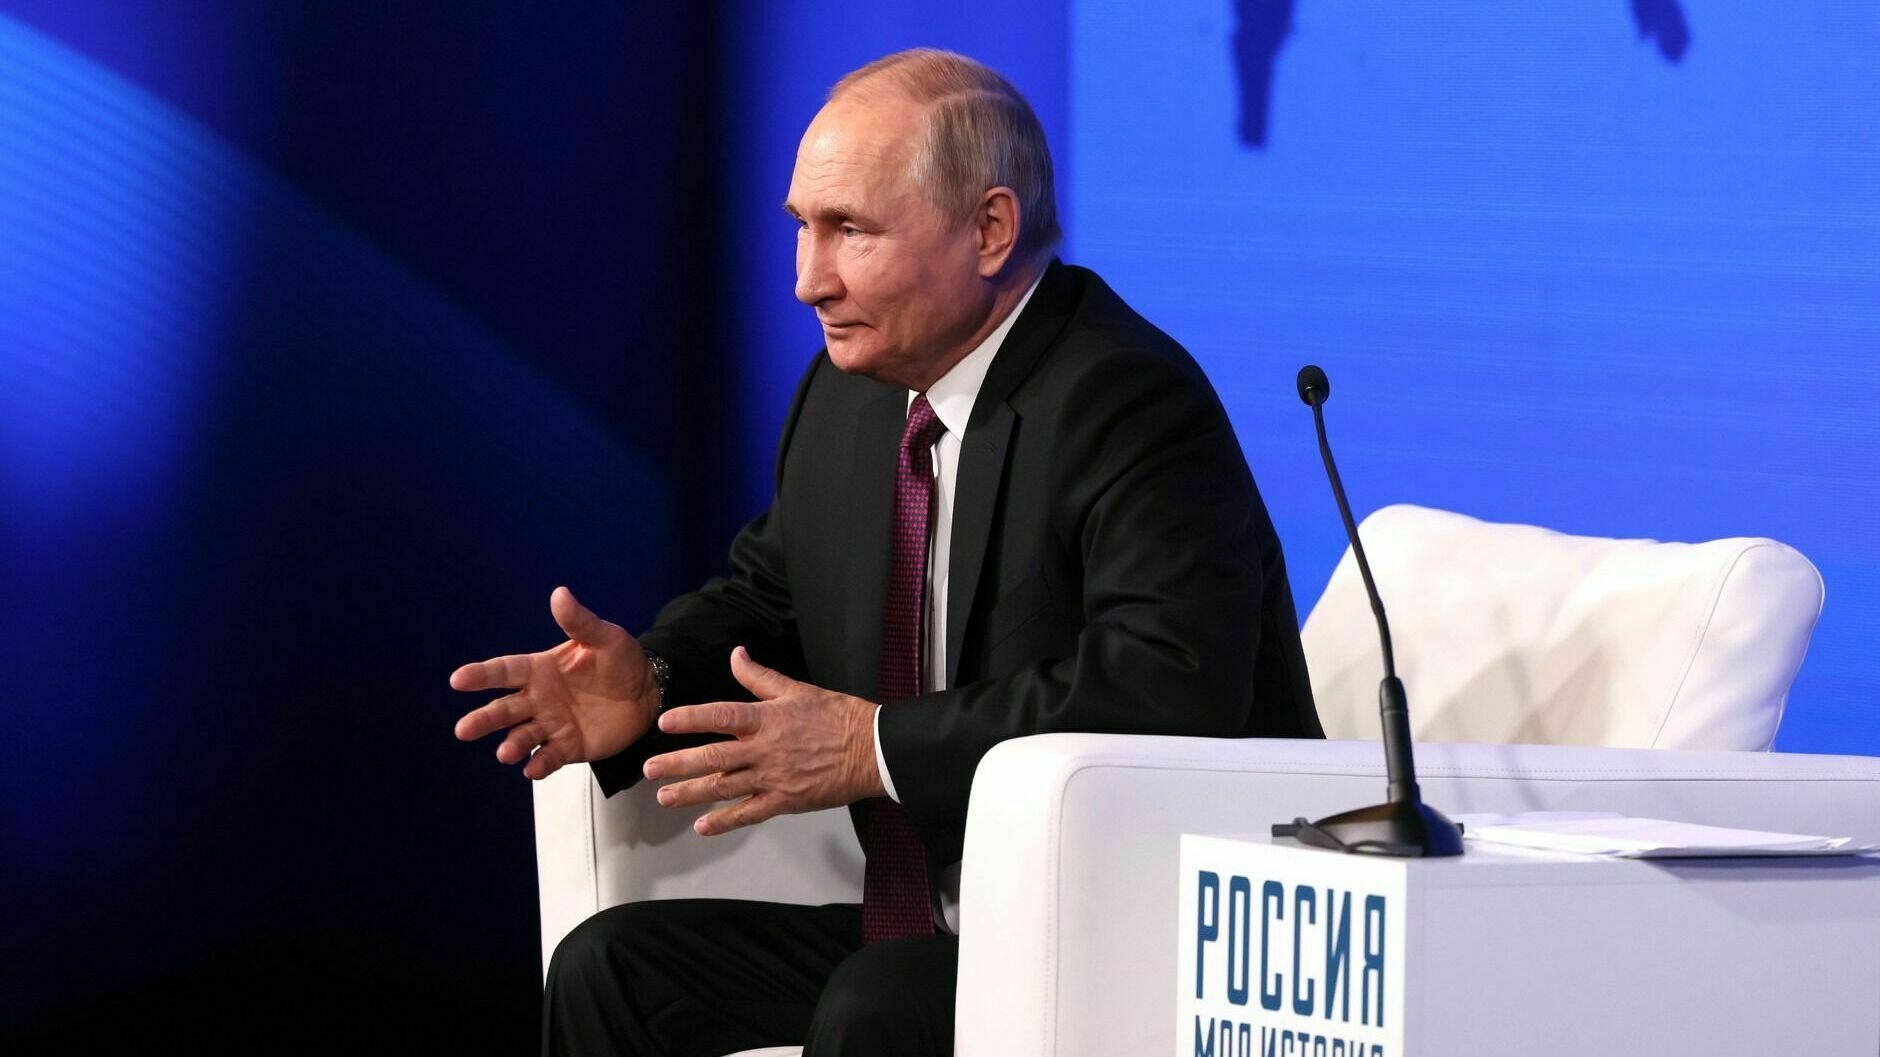 Putin: Russia suspends the START Treaty